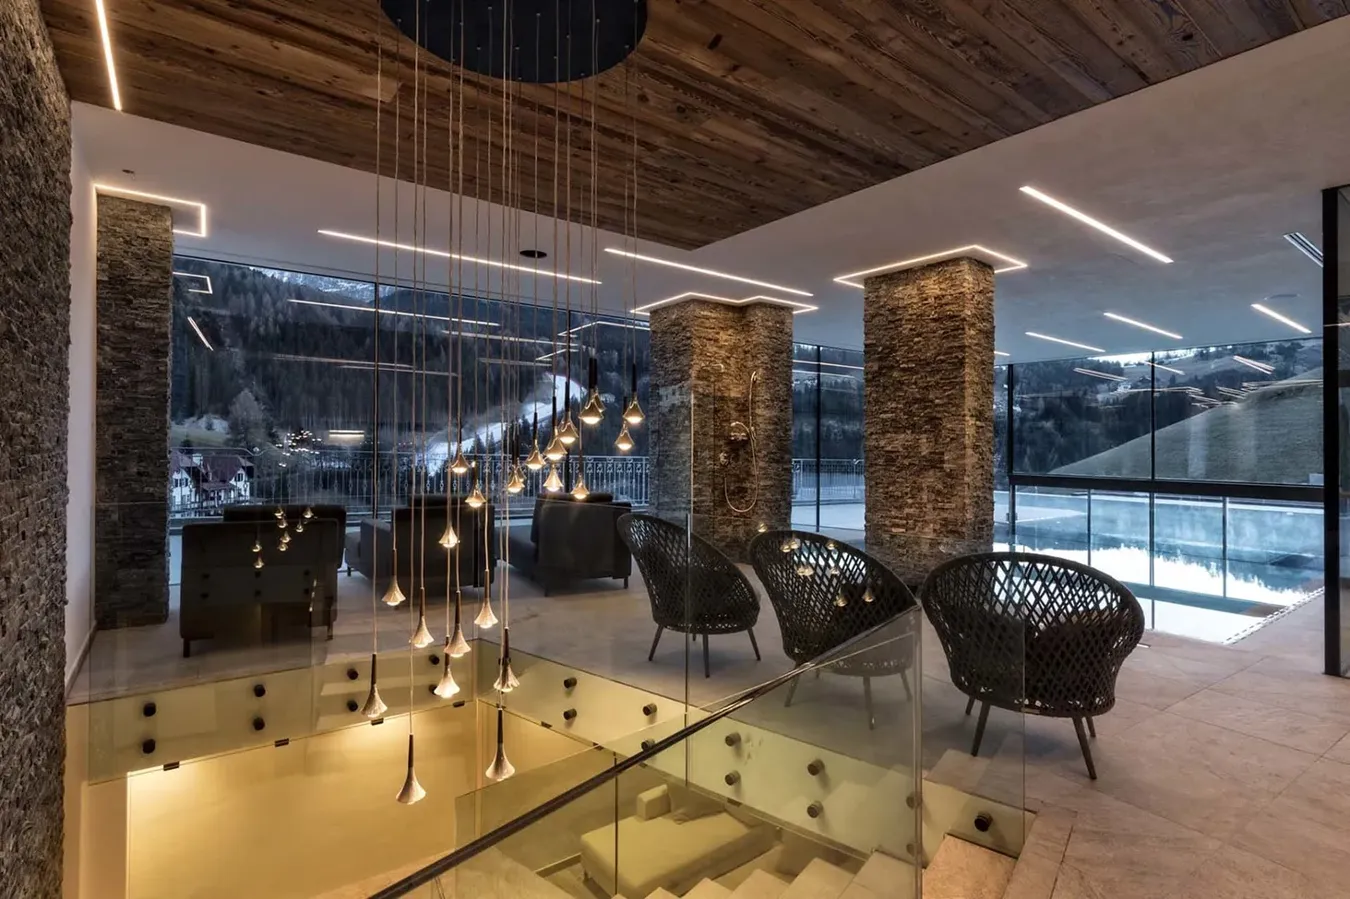 Salón de montaña lujoso con iluminación moderna, paredes de piedra y vista panorámica de paisaje nevado.